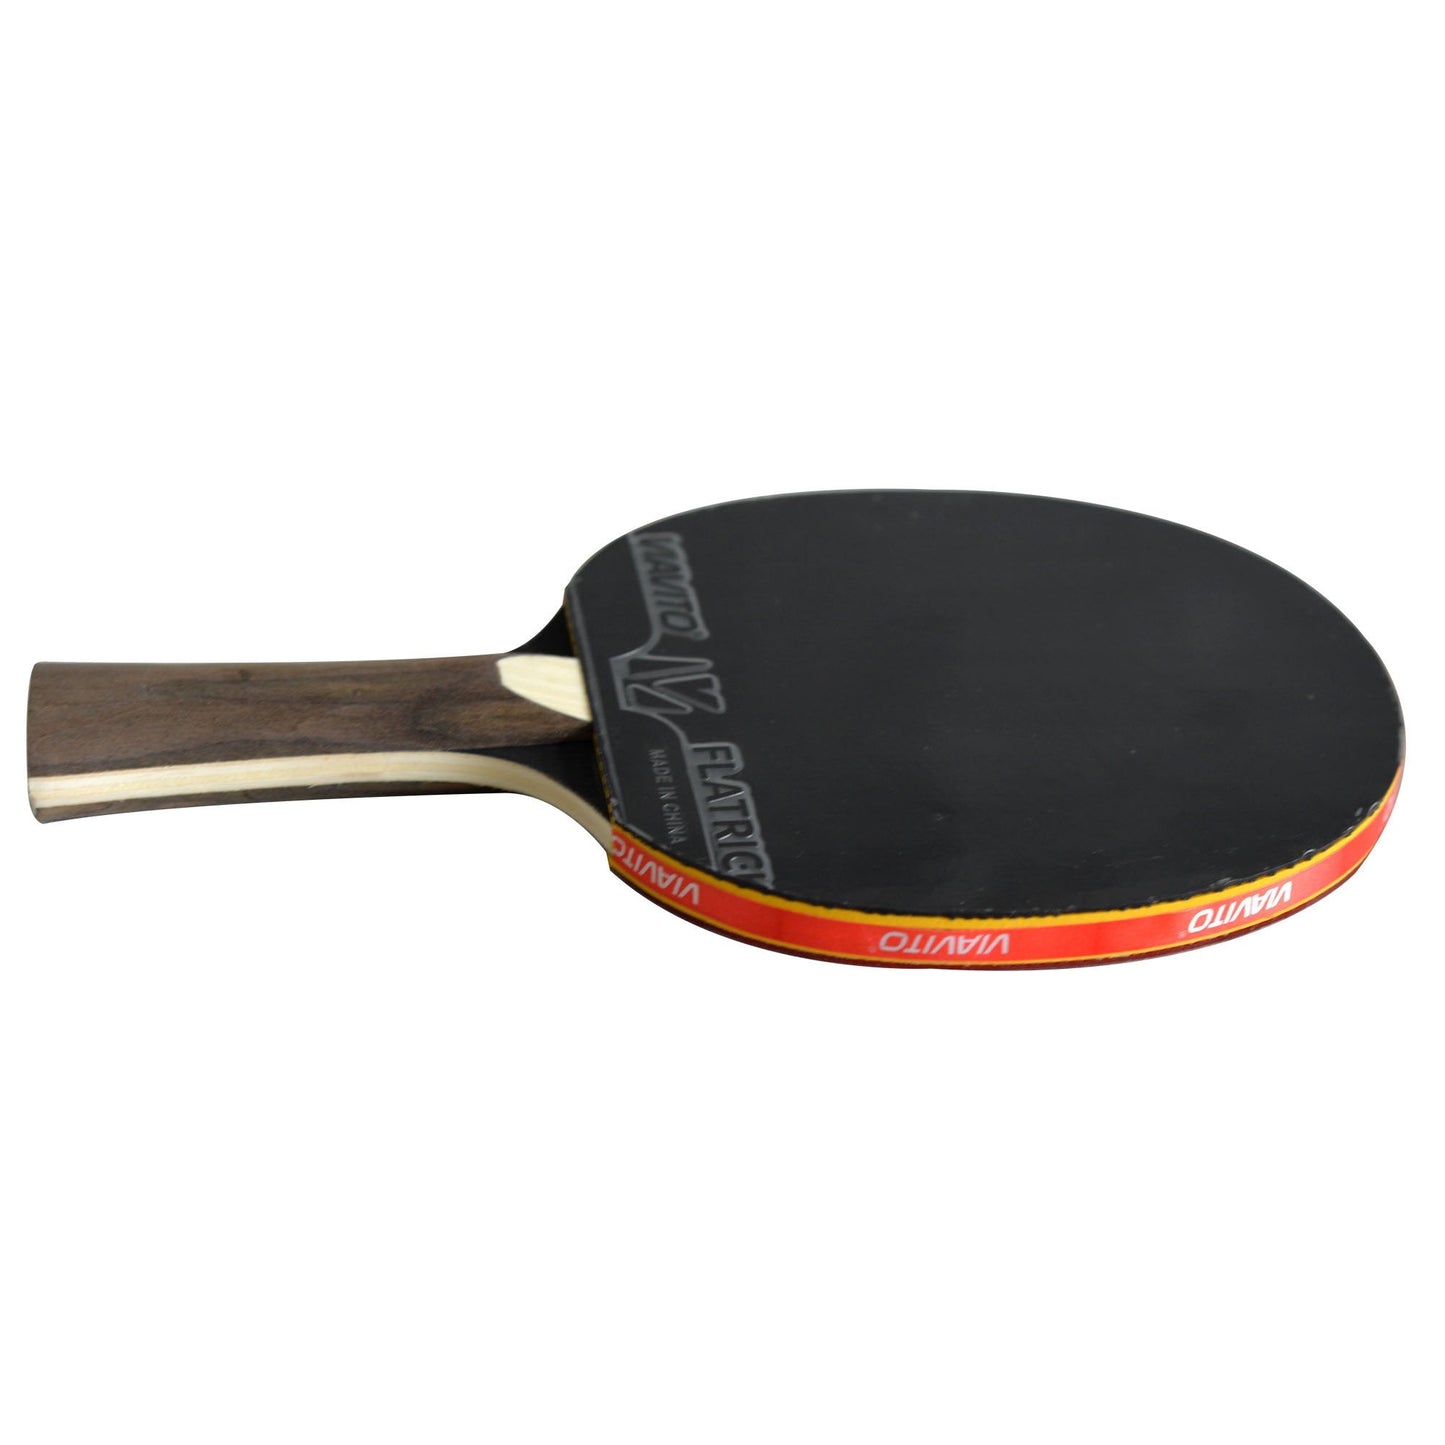 |Viavito FlaTrick Table Tennis Bat - Horizontal|